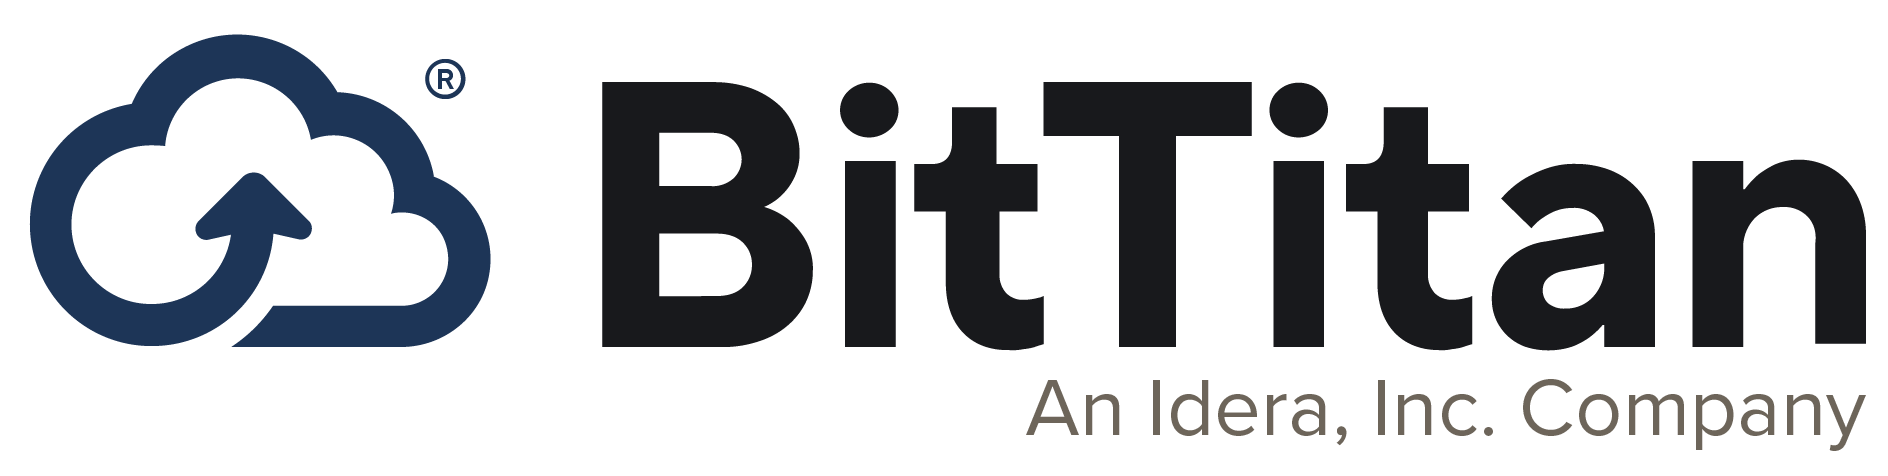 BT_IDERA Logo_NEW.png